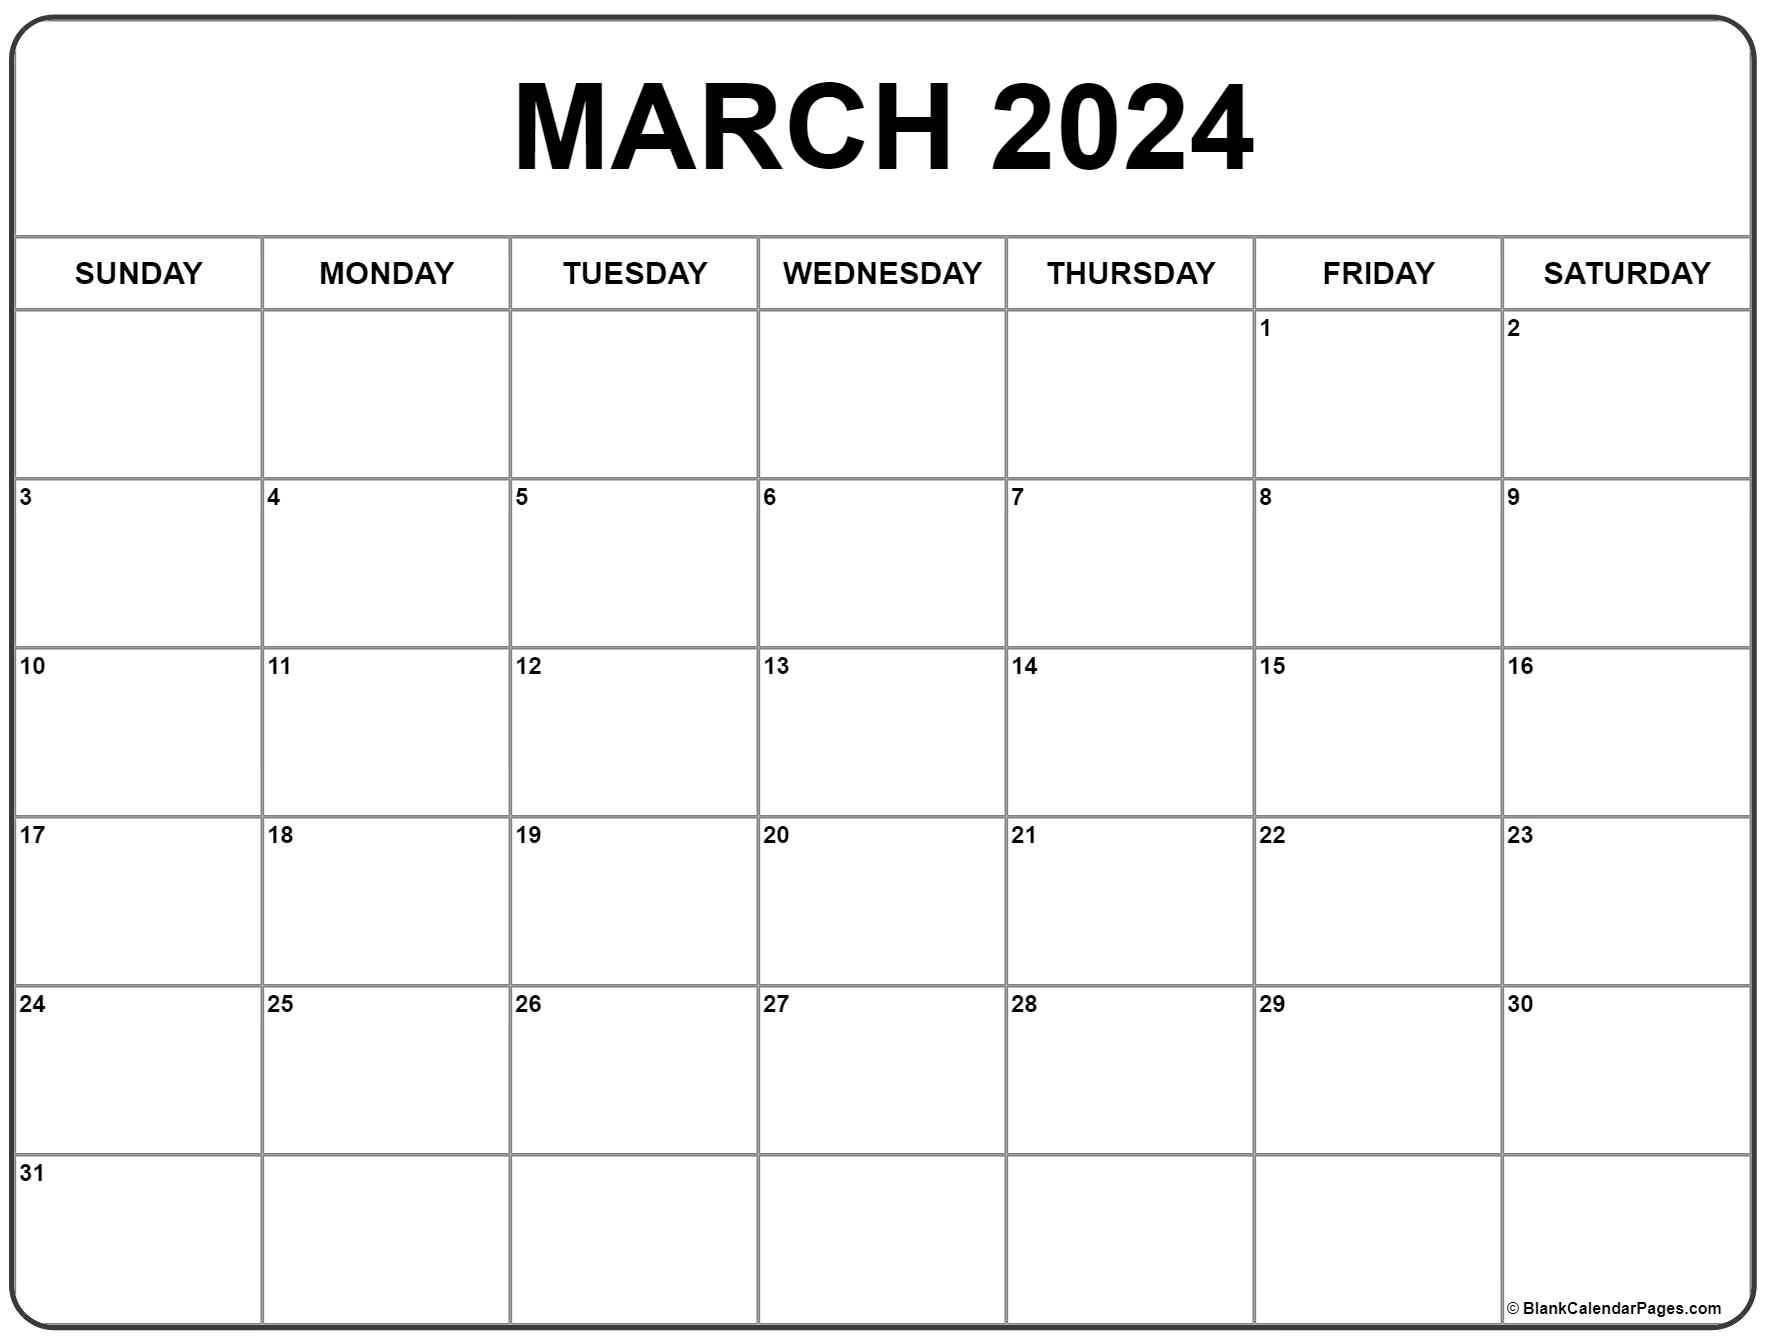 March 2024 Calendar | Free Printable Calendar for Printable Calendar Of March 2024